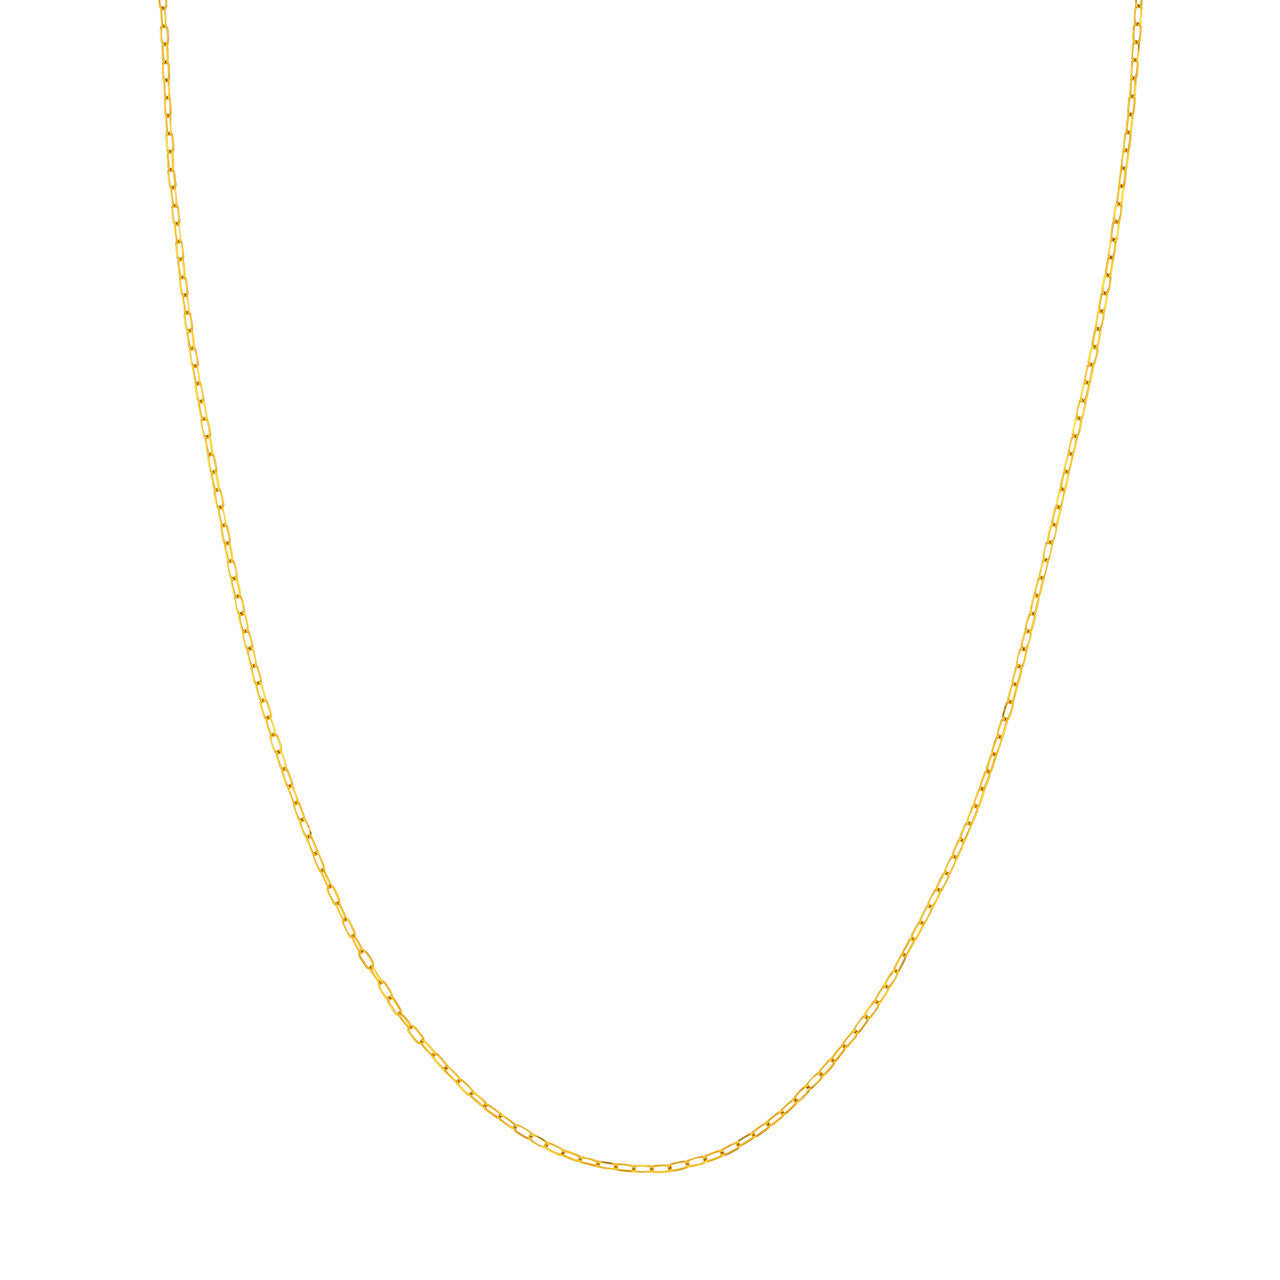 14k Yellow Gold Diamond Cut Forzentina Chain Necklace